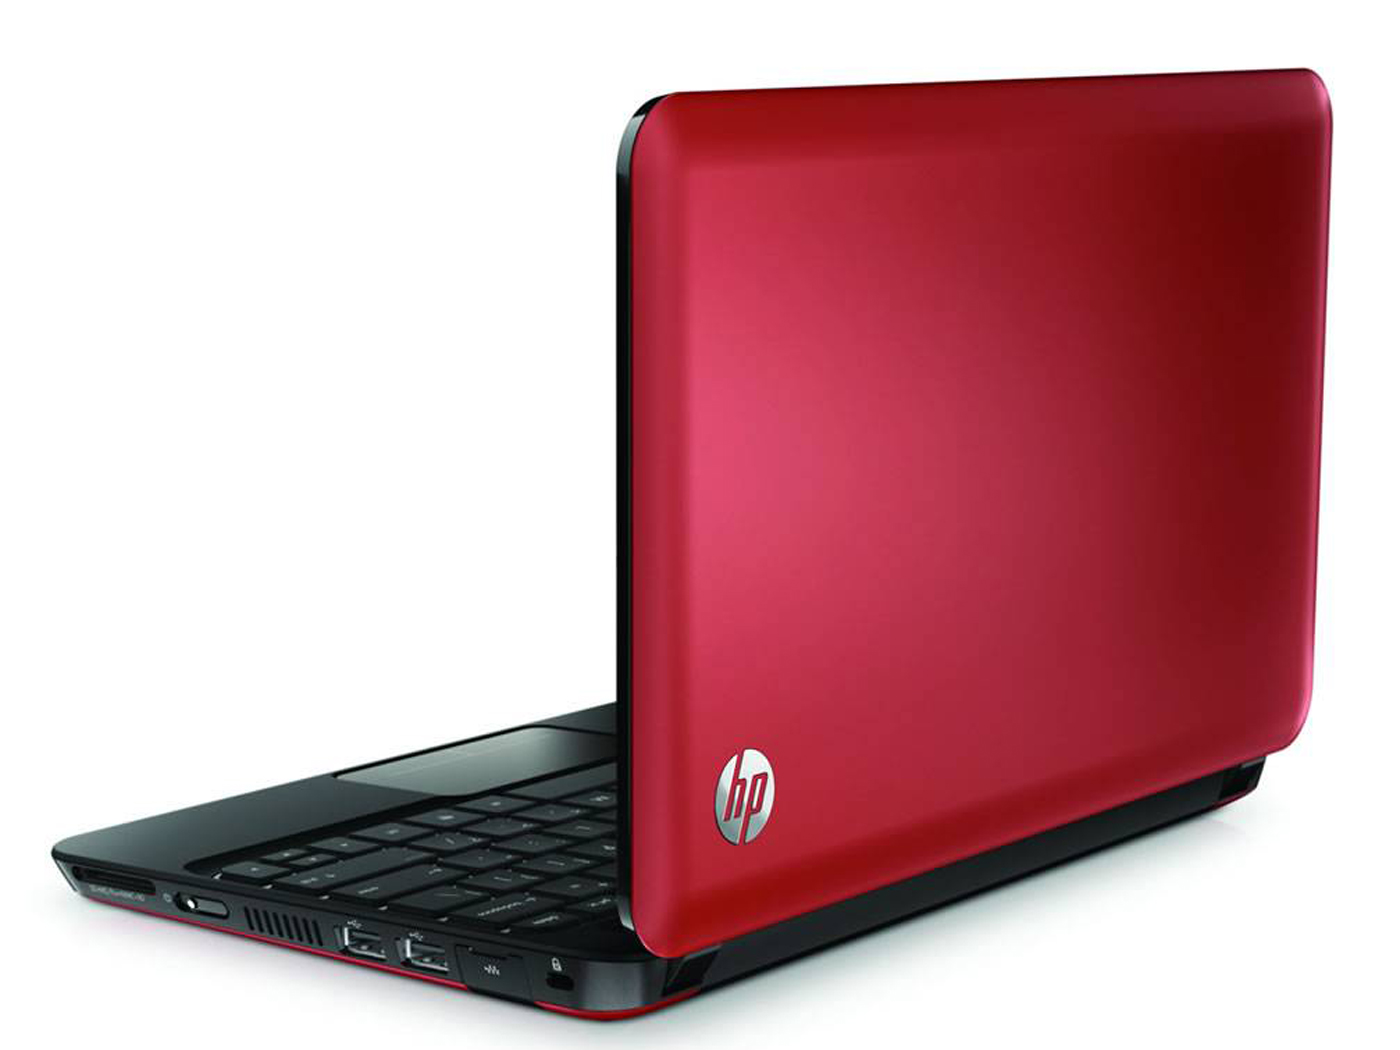 HP Mini 110 -  External Reviews